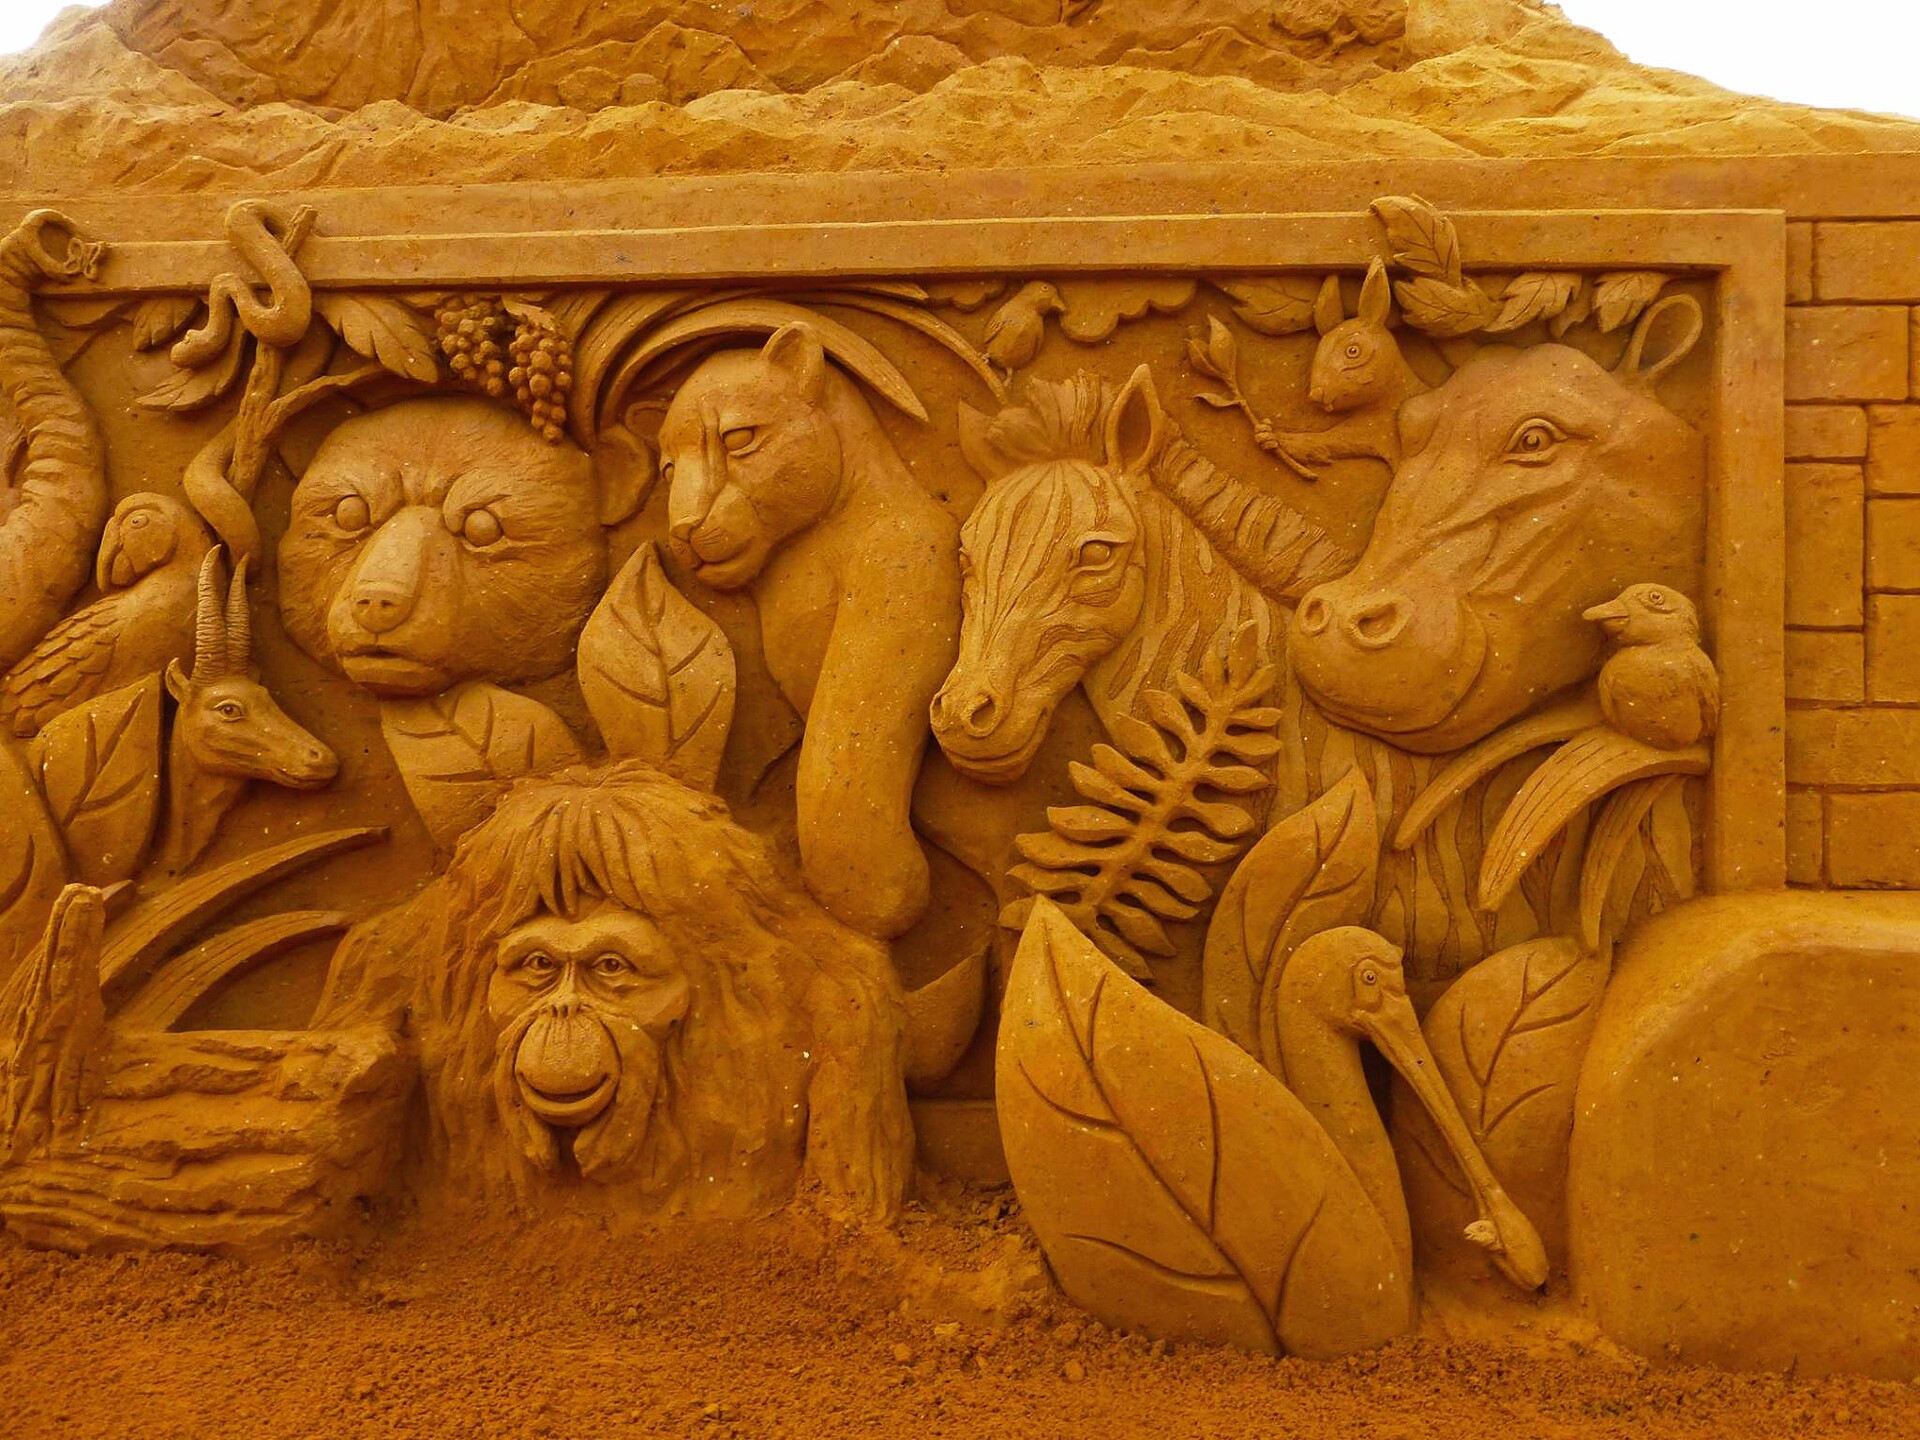 ArtStation - Animals Sand Sculpture